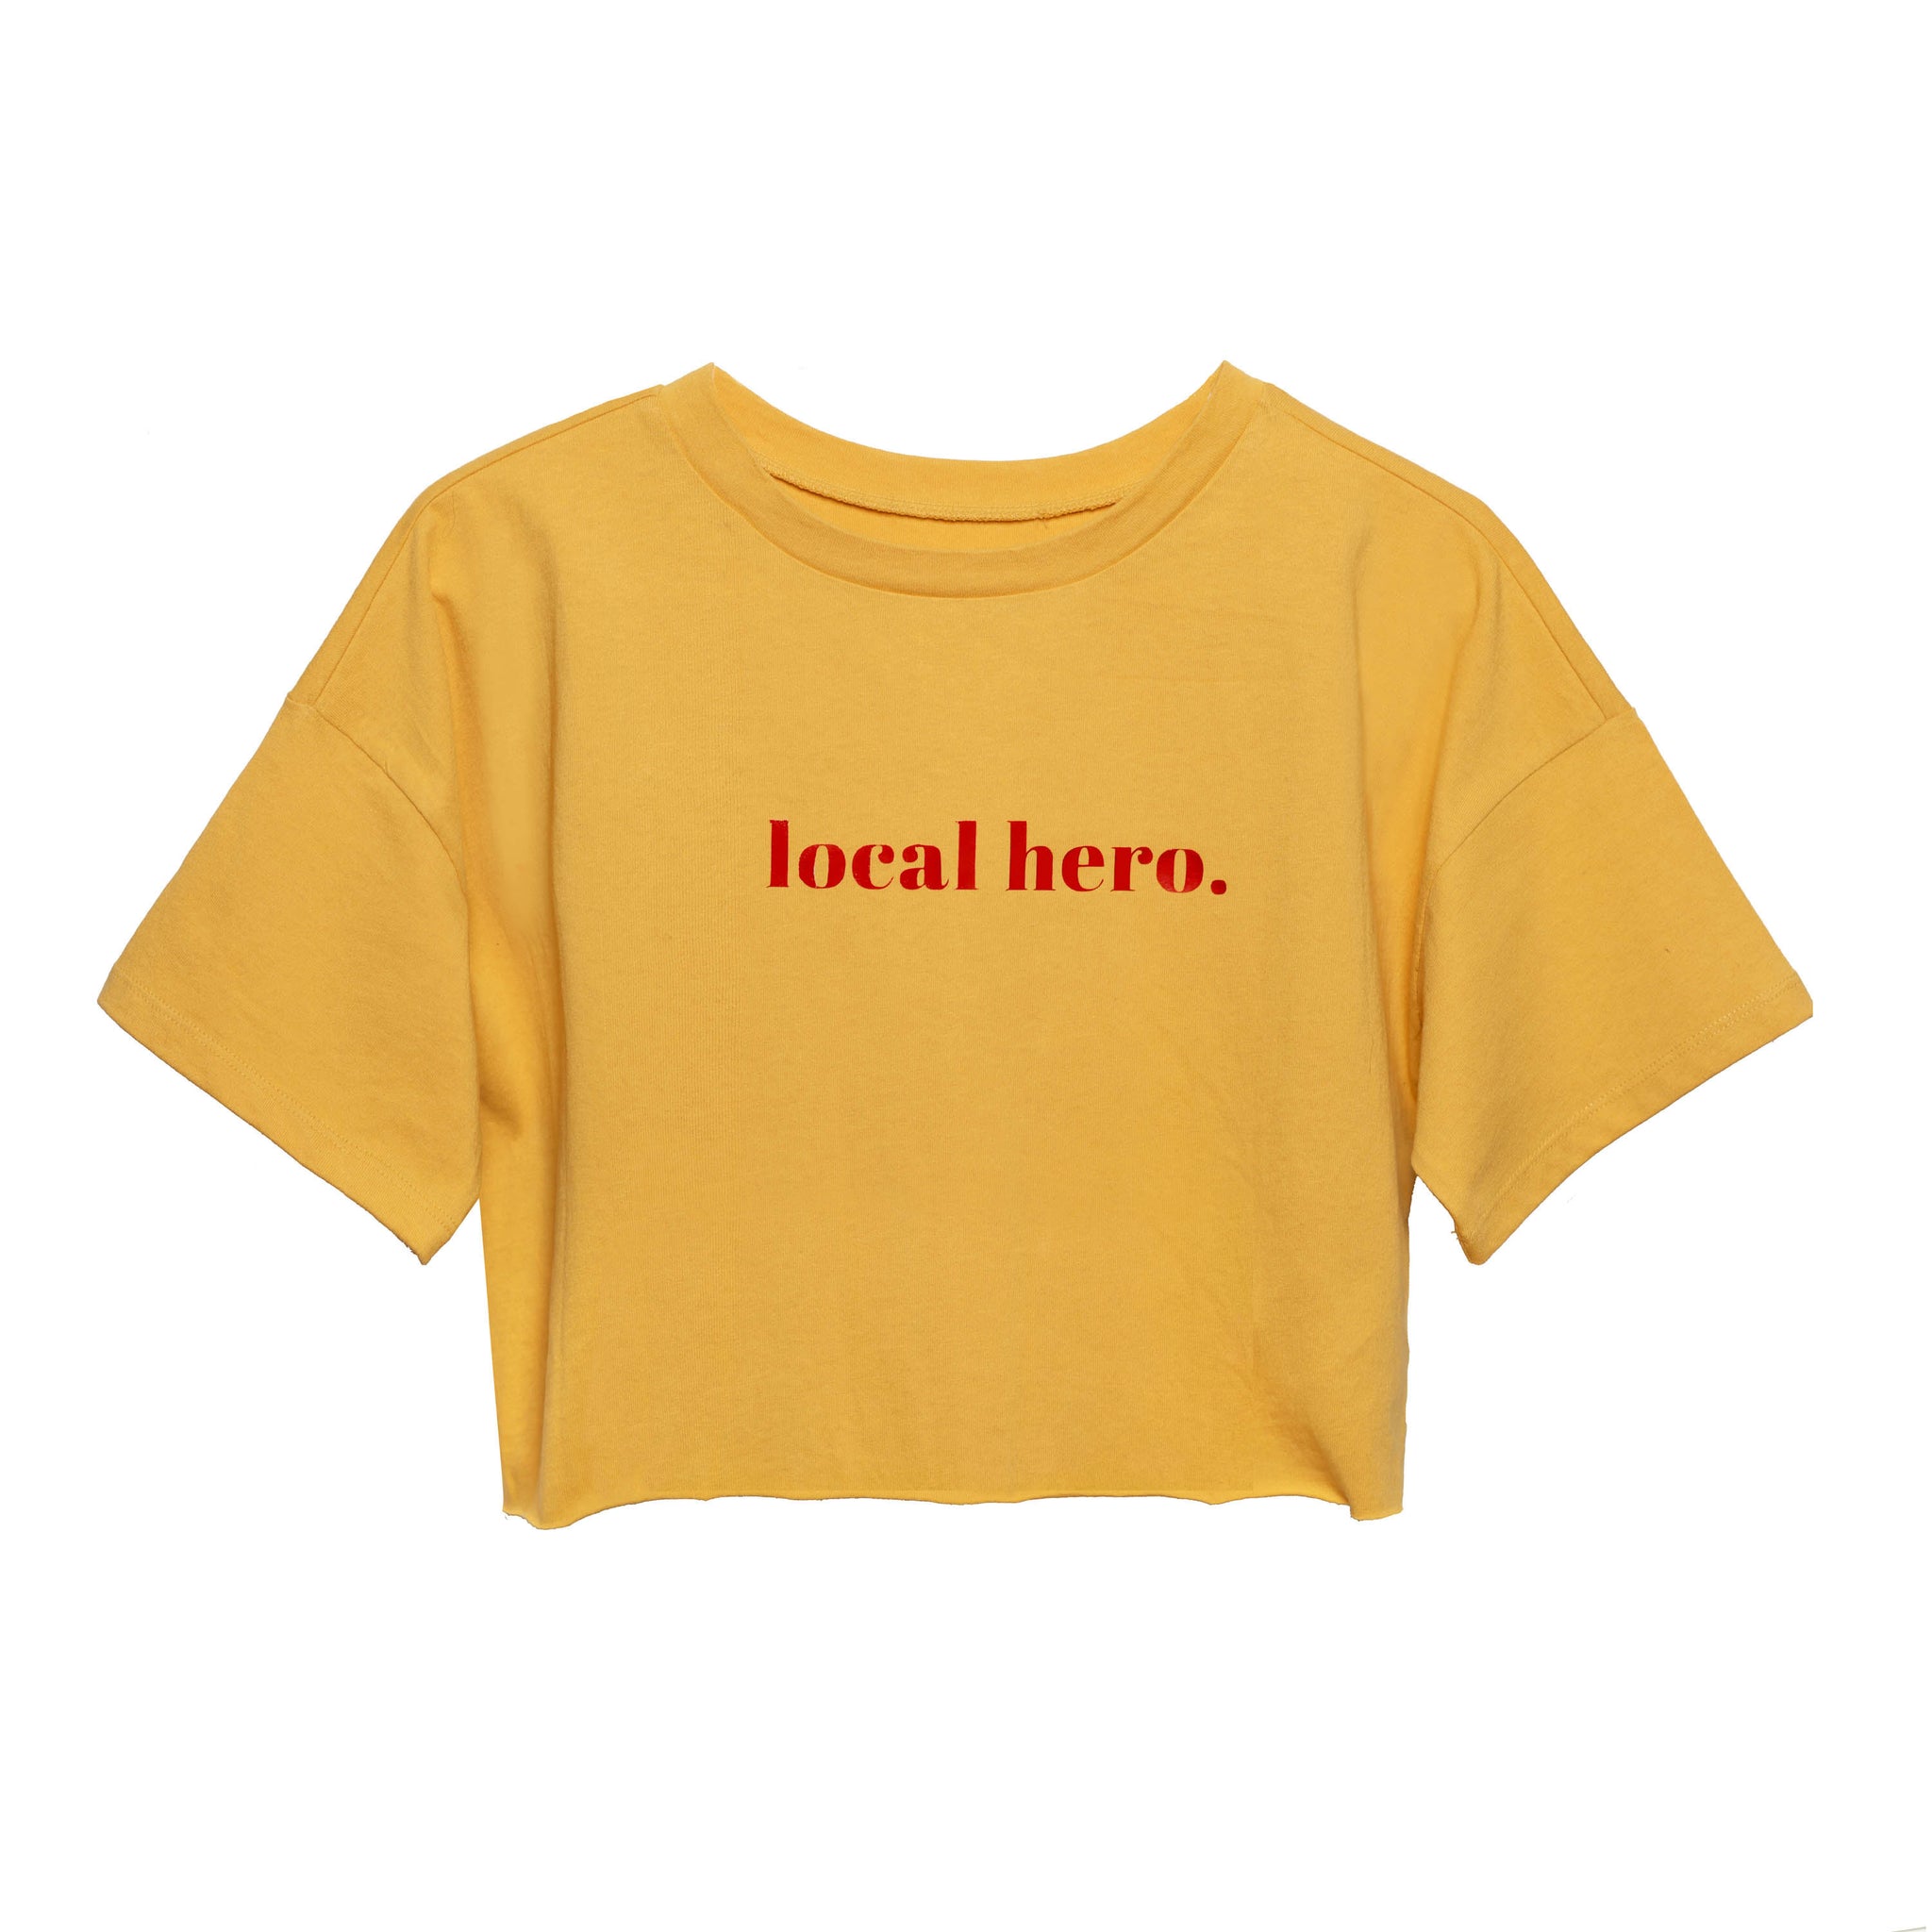 local hero. - The REBEL Tribe - graphic tee, tee, t-shirt, crew neck, tag, yellow, crop tee, crop top, sweatshirt, motherhood, mother's special,  mother's day, 